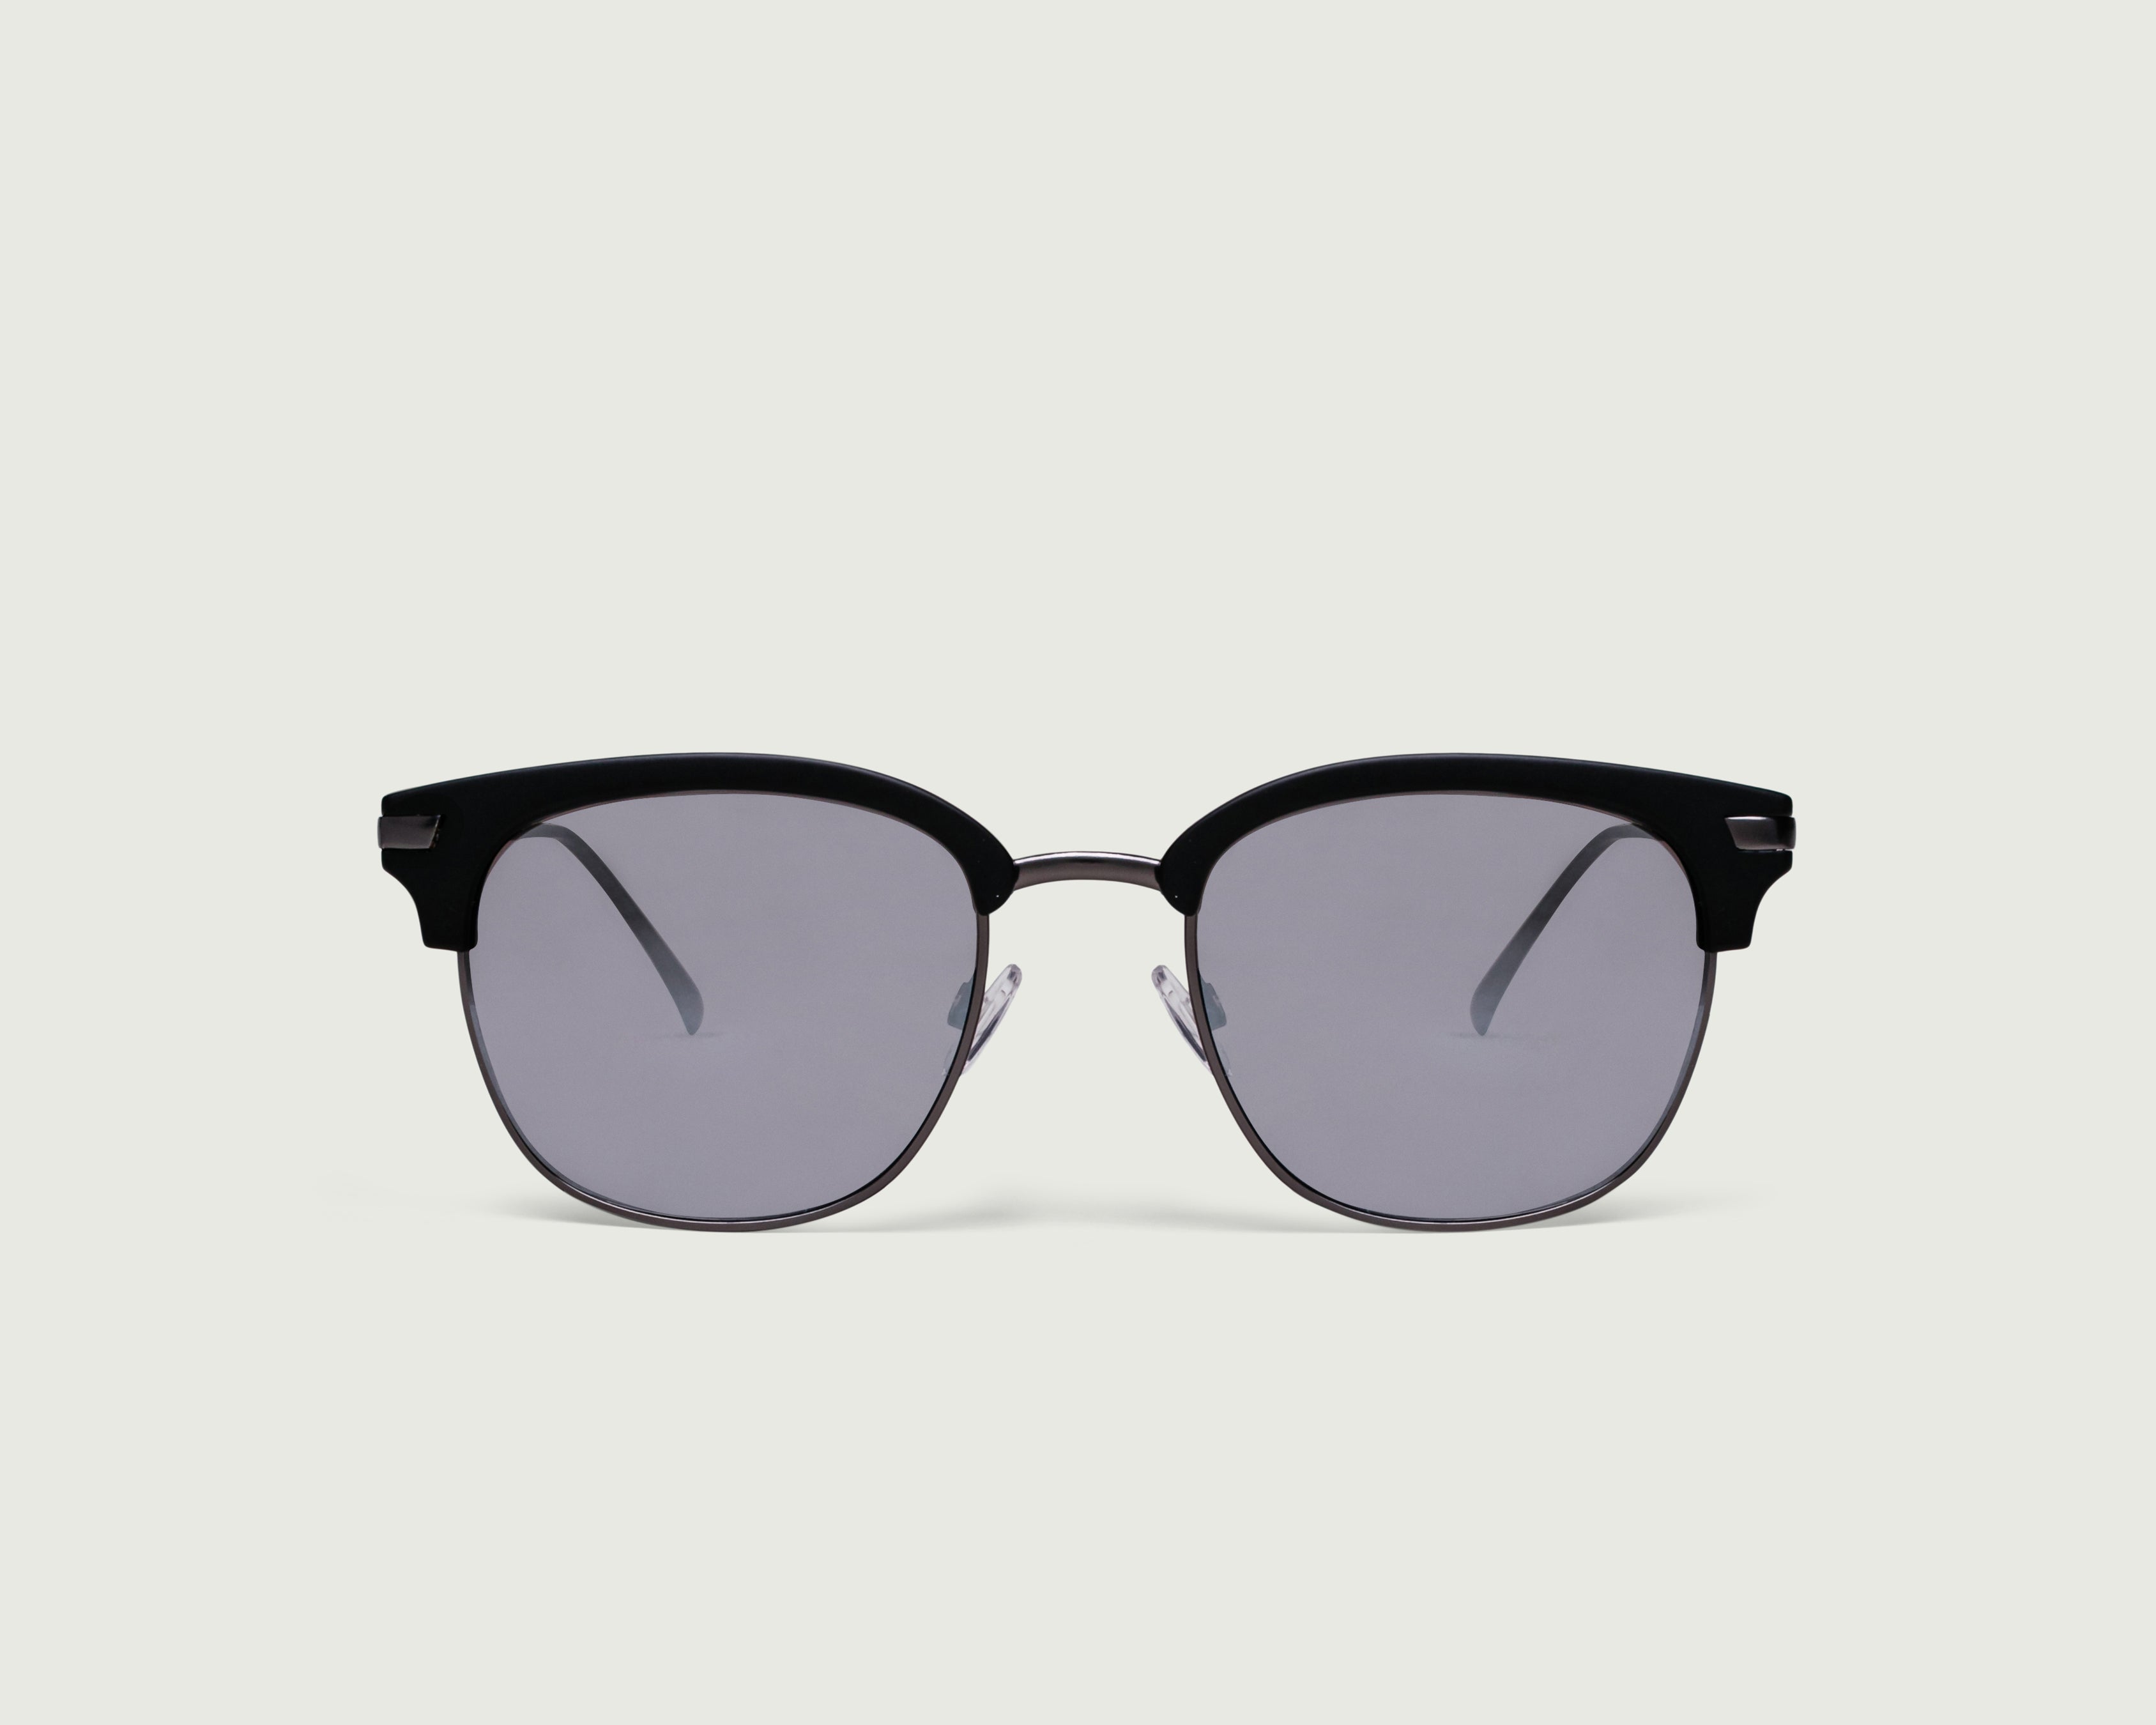 Nickel::Axel Sunglasses browline black plastic metal front